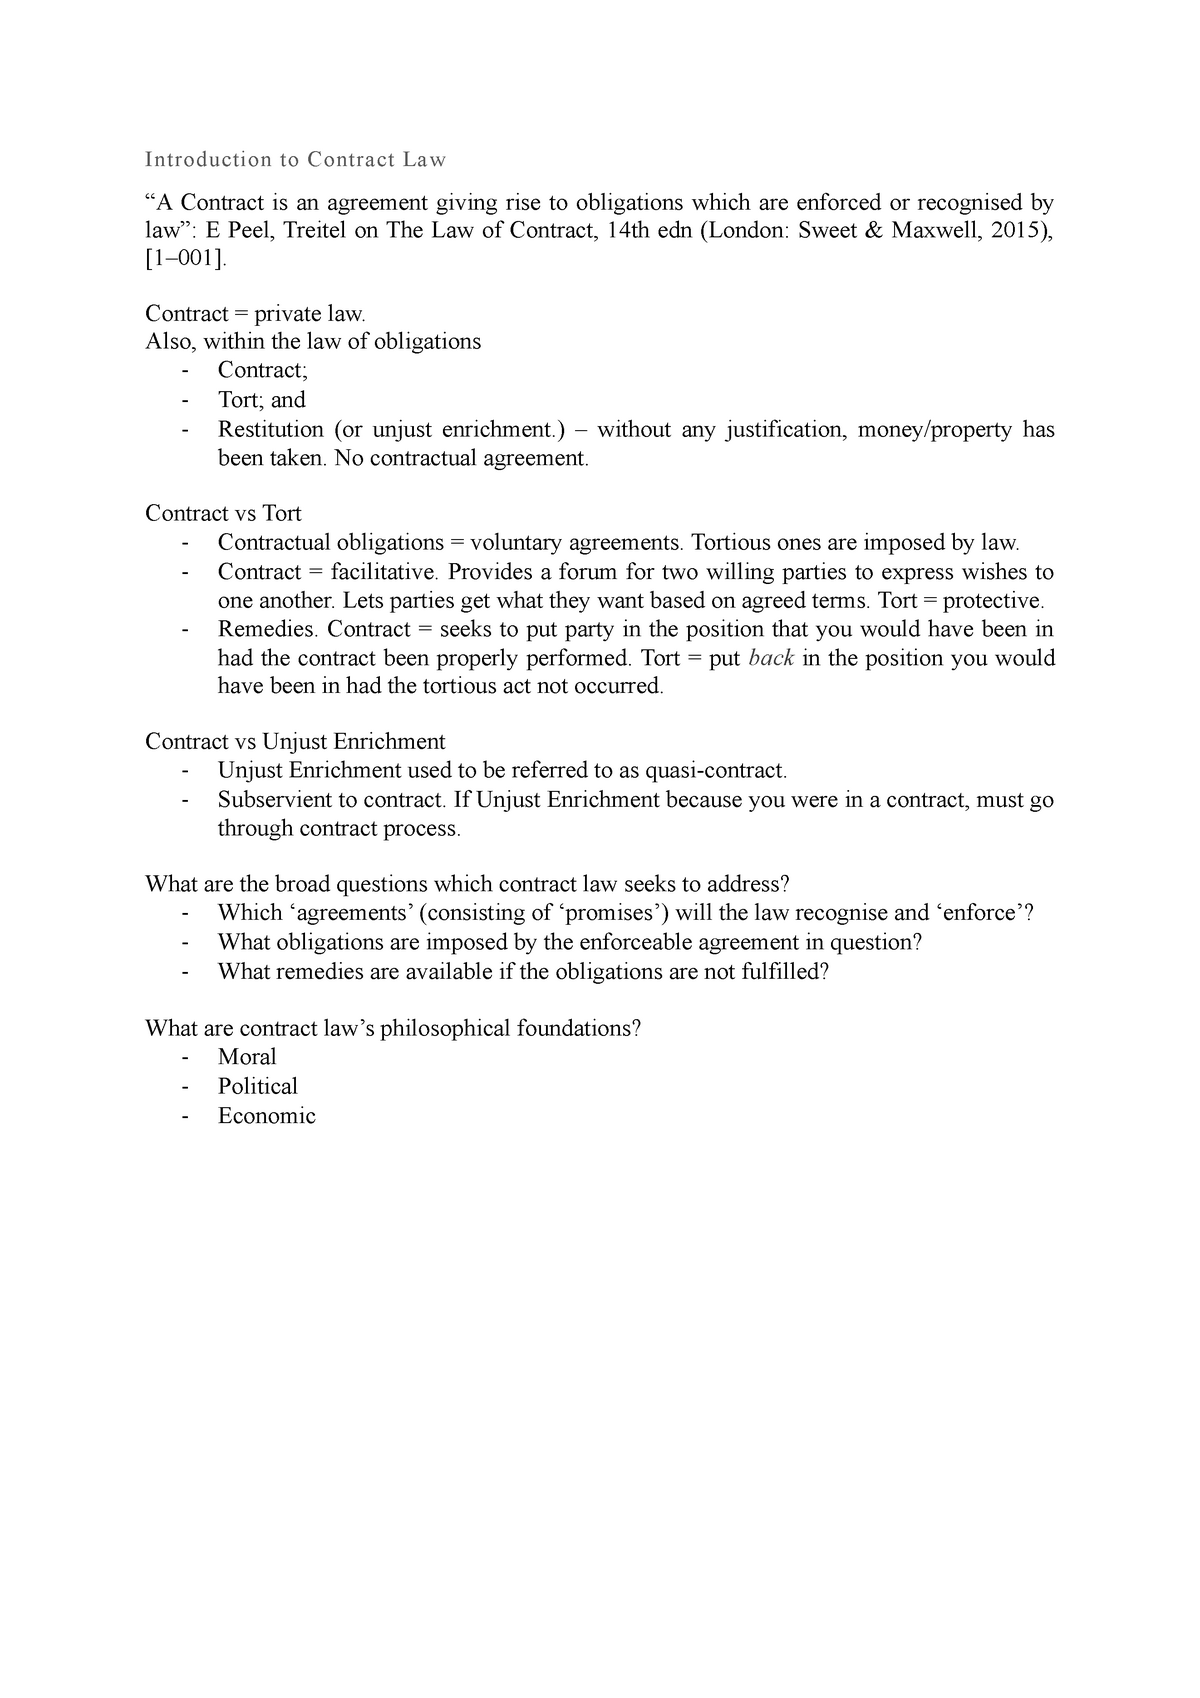 contract law essay pdf